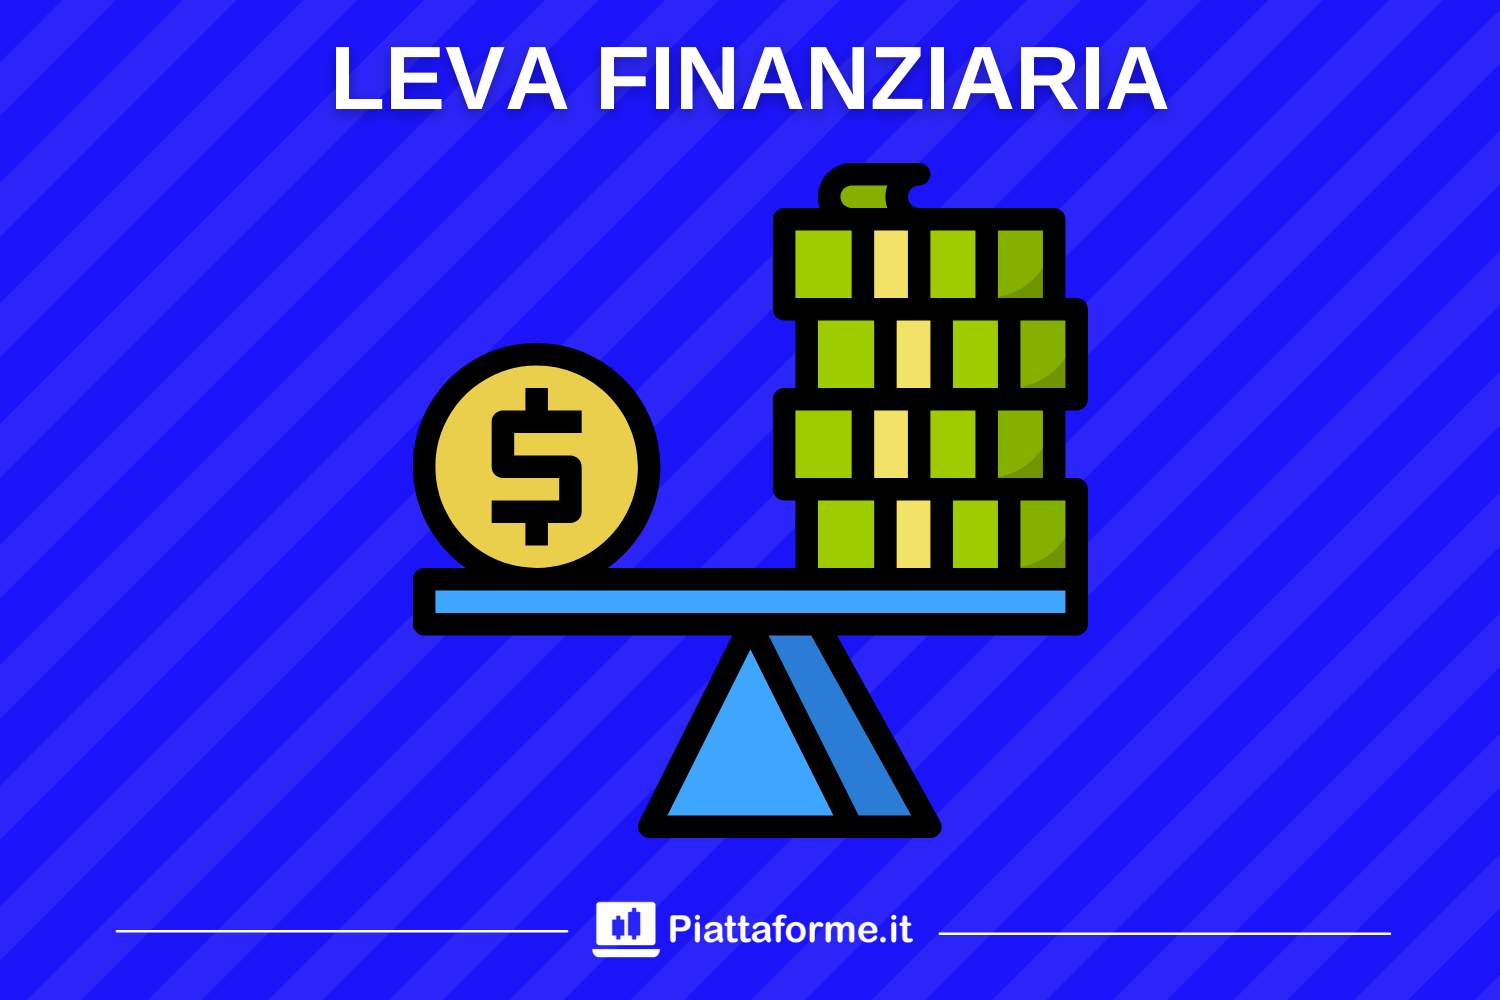 Leva Finanziaria main pic